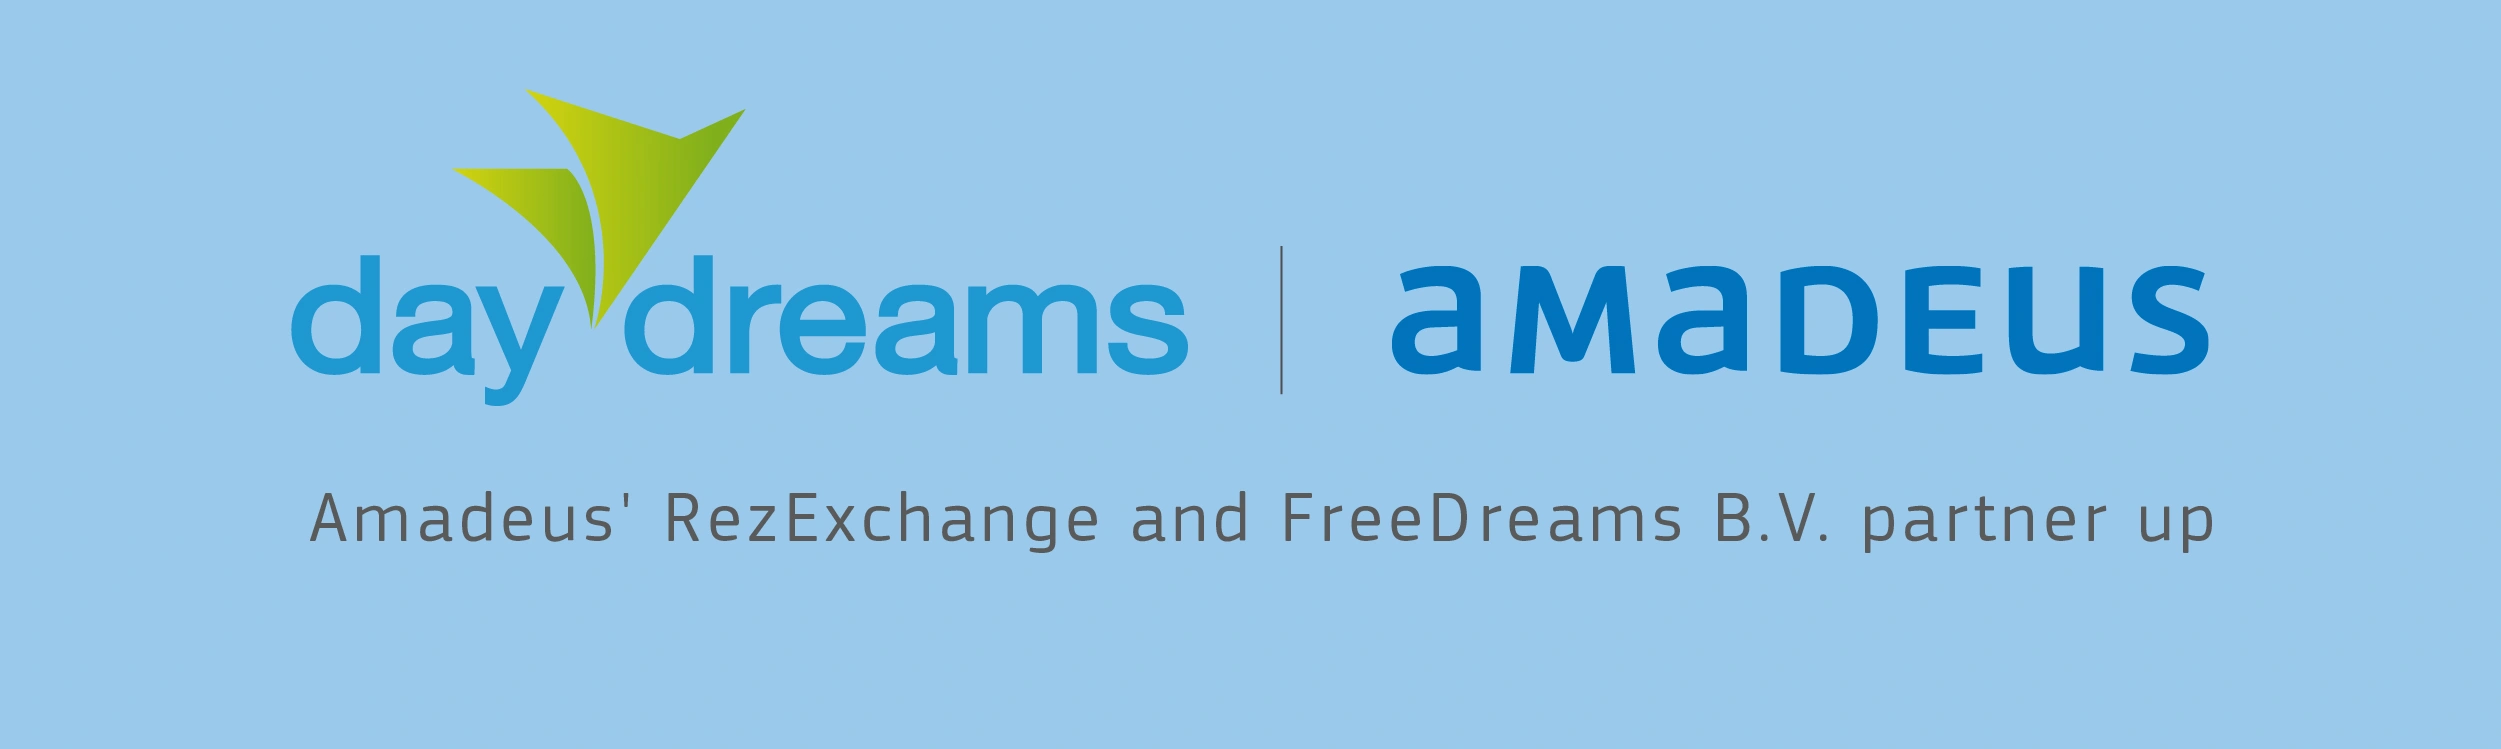 freedreams-blog-header